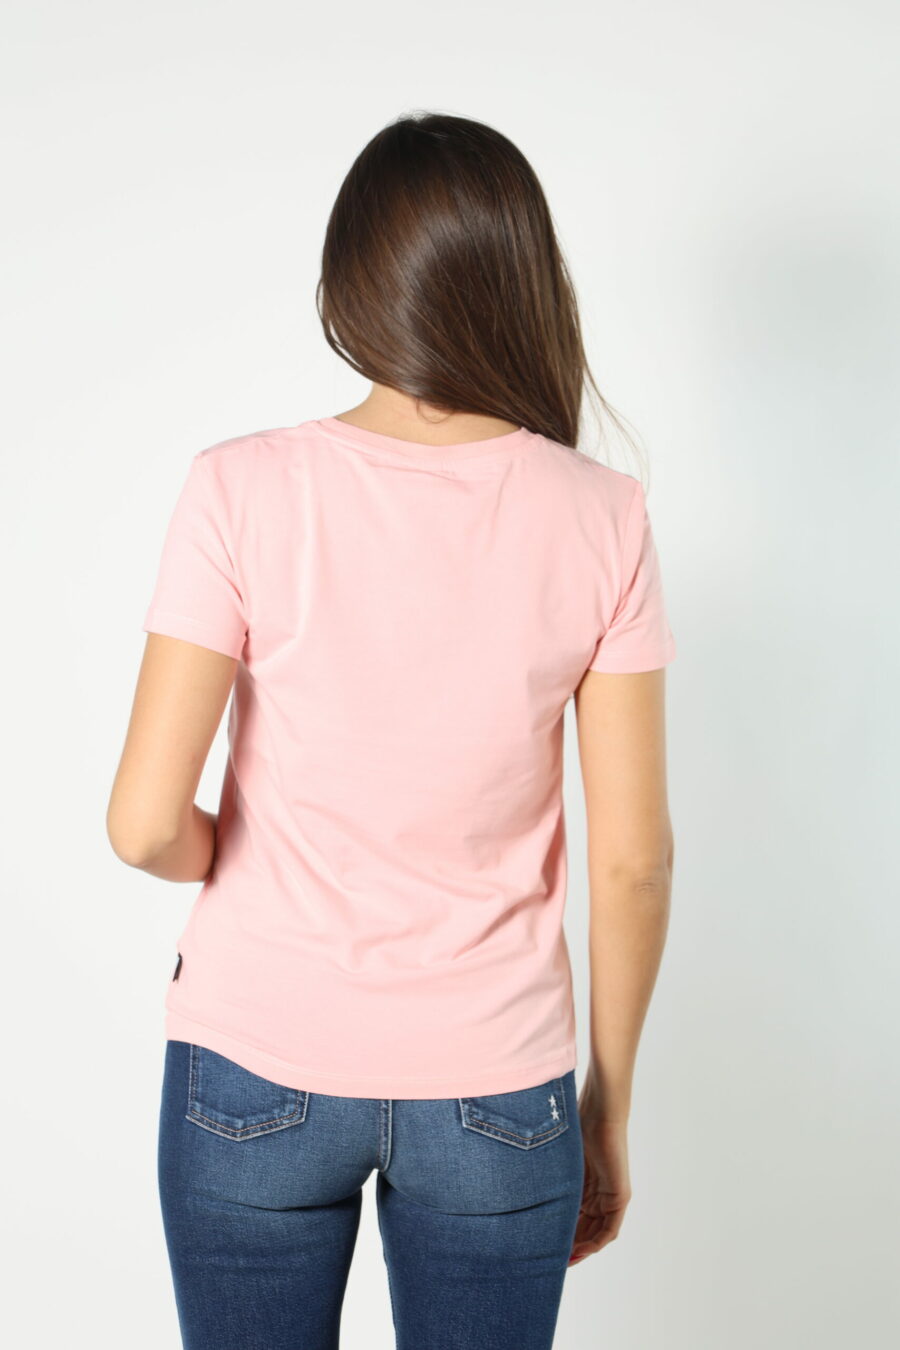 Camiseta rosa con logo parche oso "underbear" - 8052865435499 323 scaled